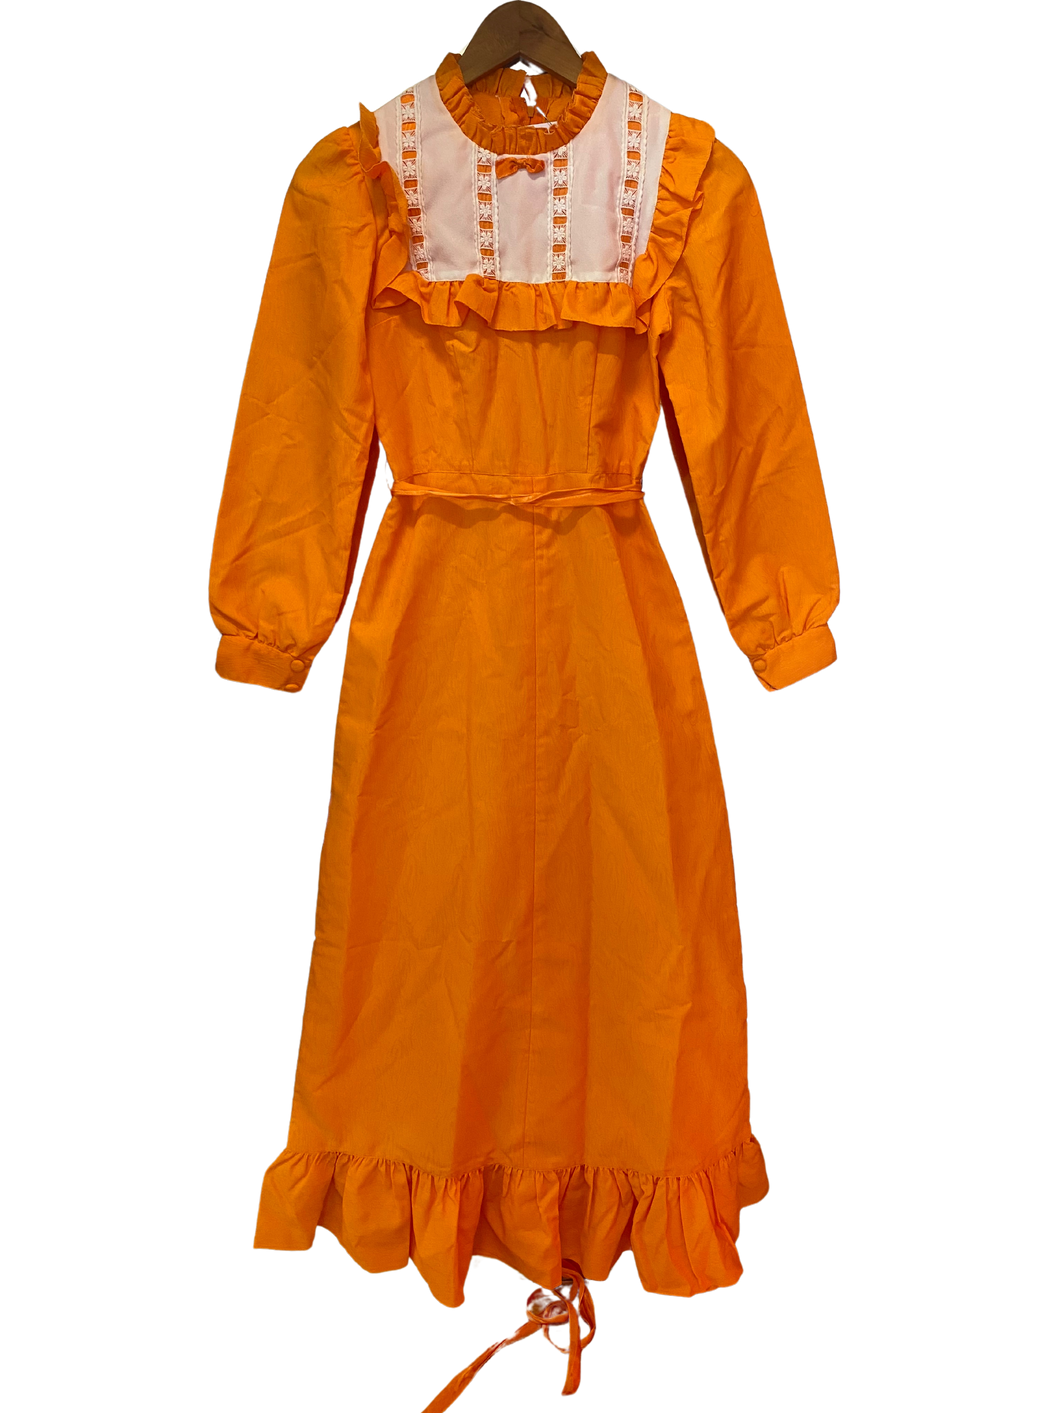 Orange and White Dress